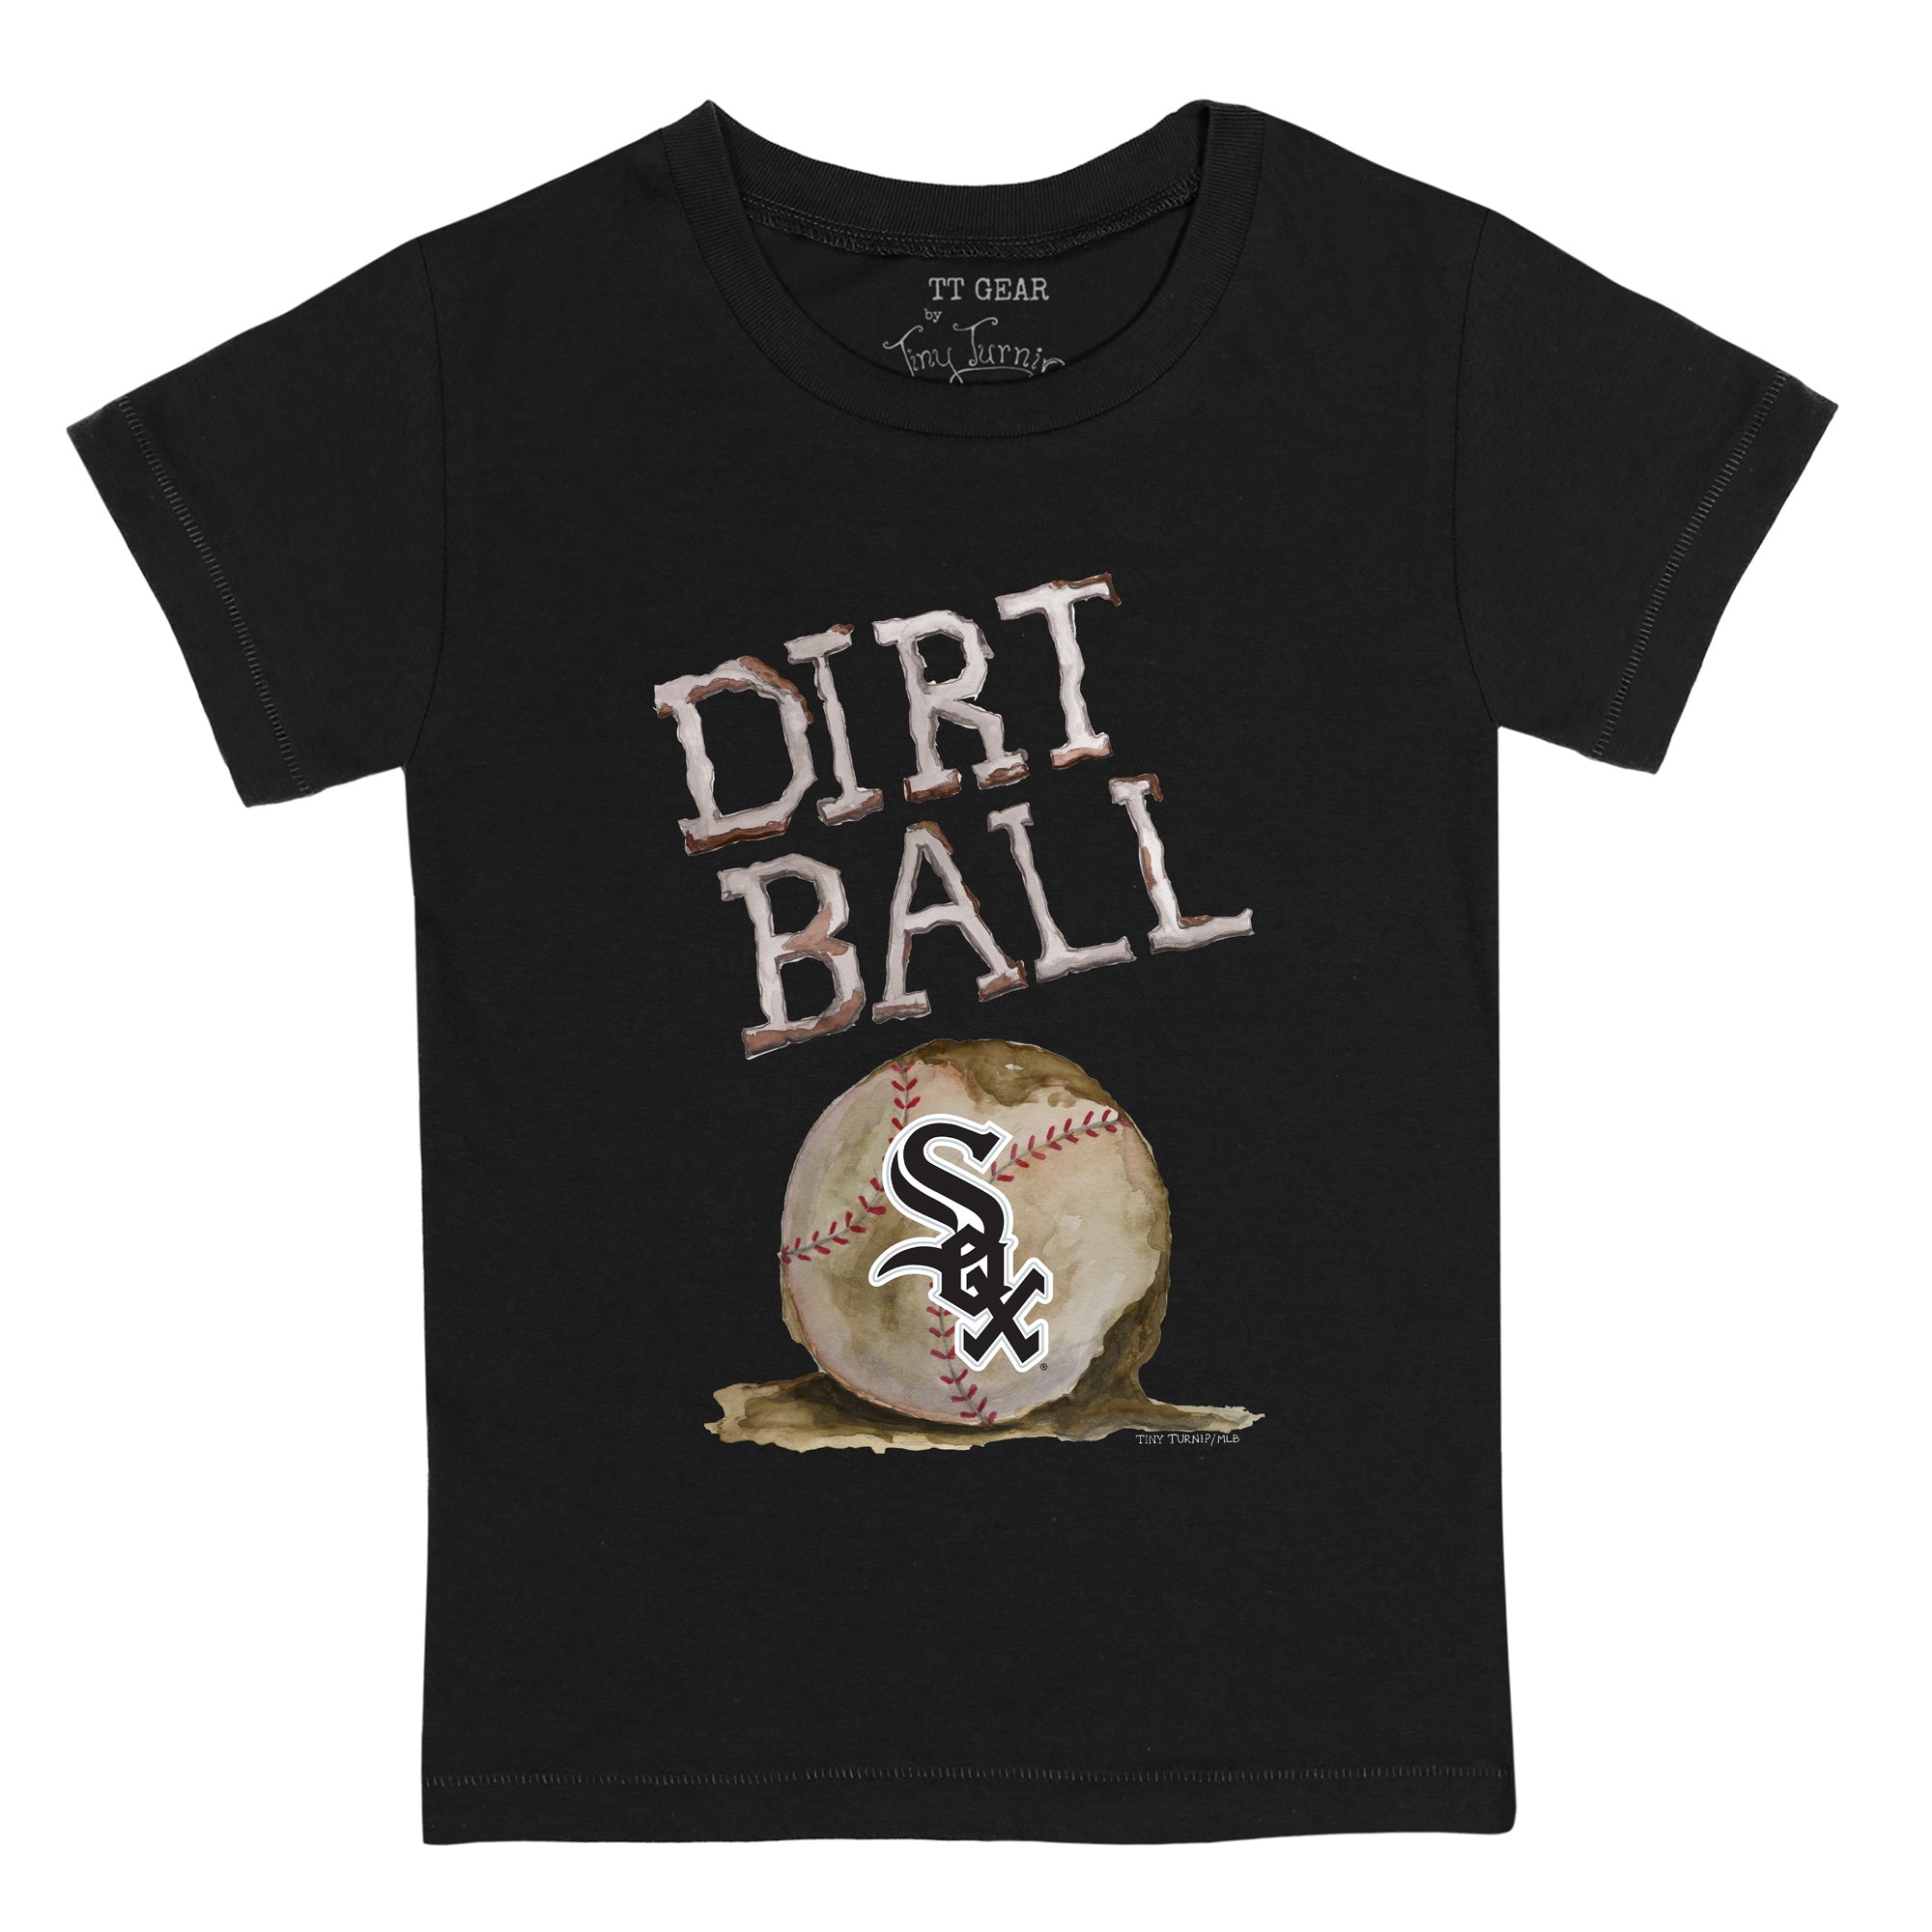 Tiny Turnip Chicago White Sox Slugger Tee Shirt Women's 3XL / White